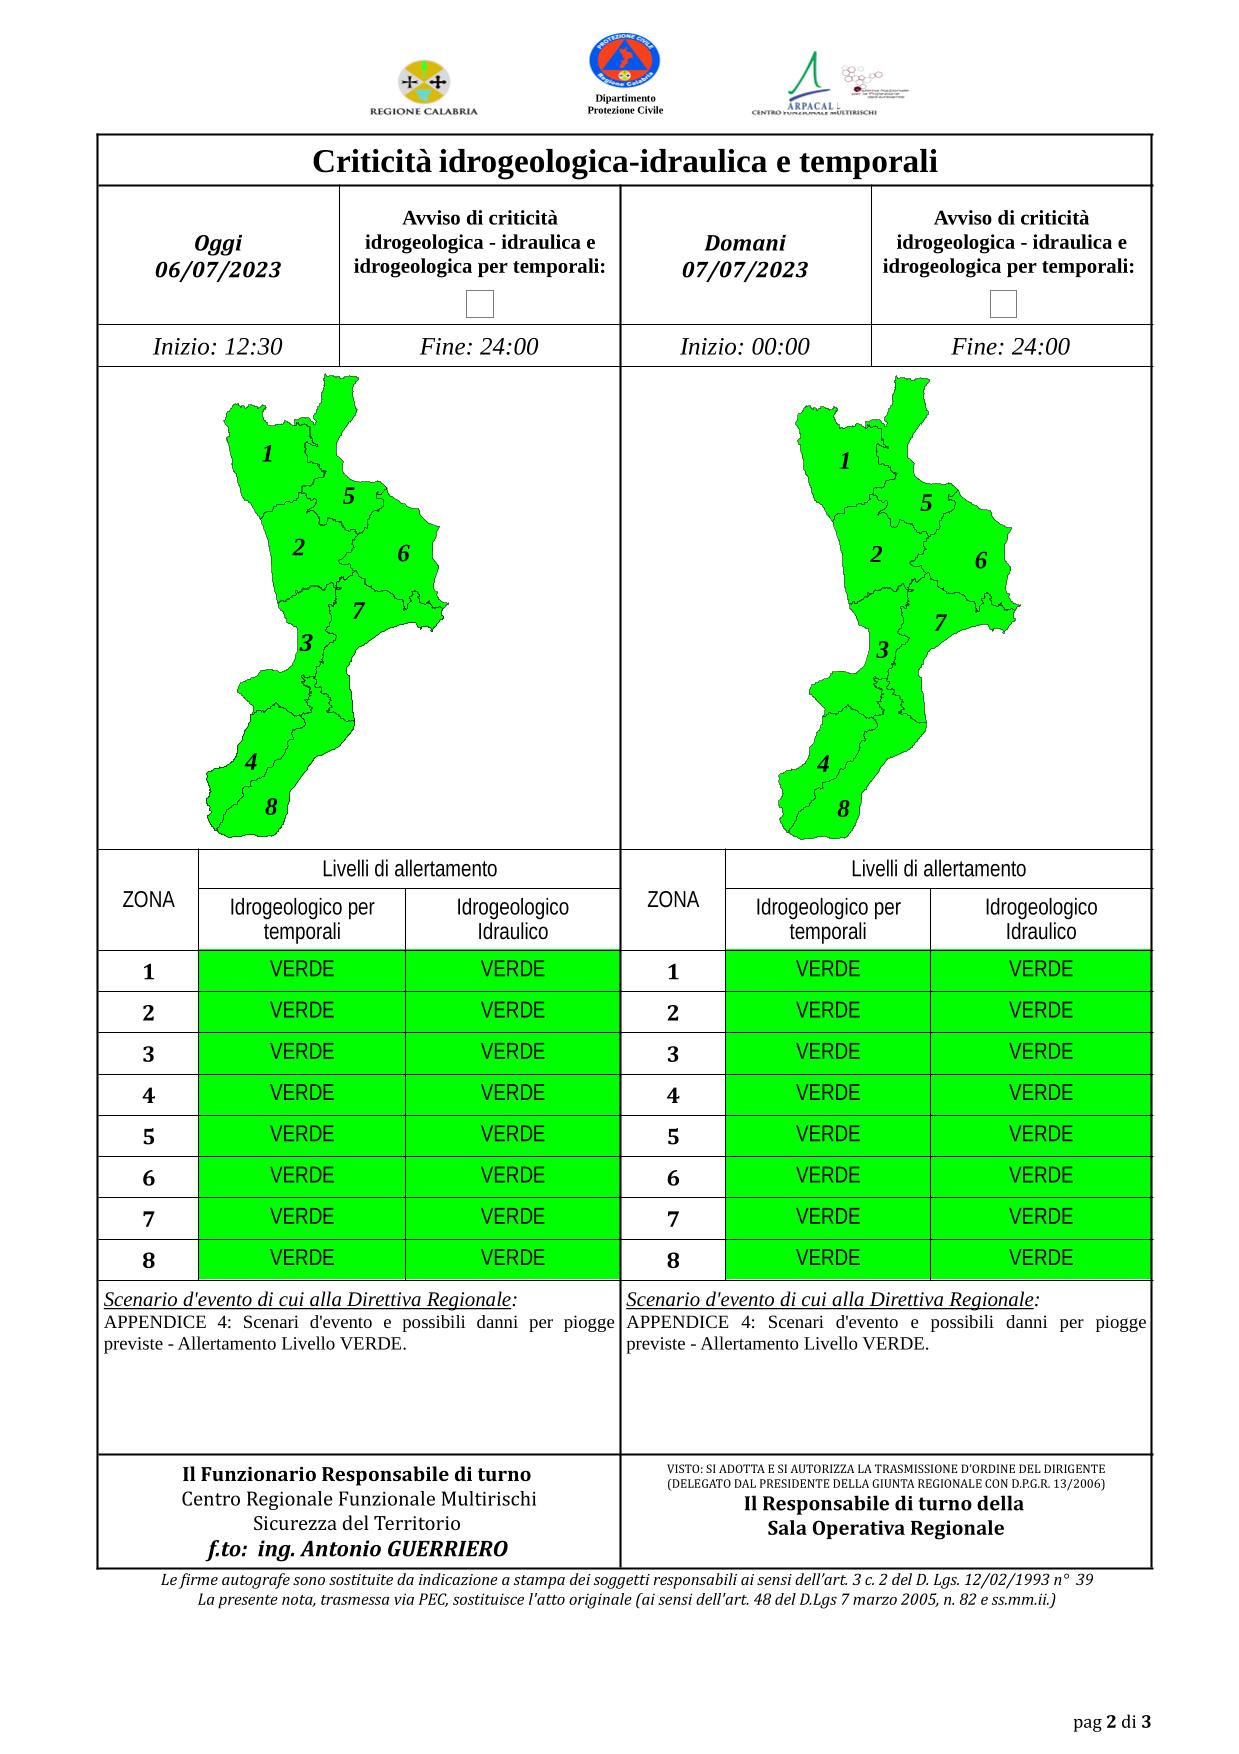 Criticità idrogeologica-idraulica e temporali in Calabria 06-07-2023